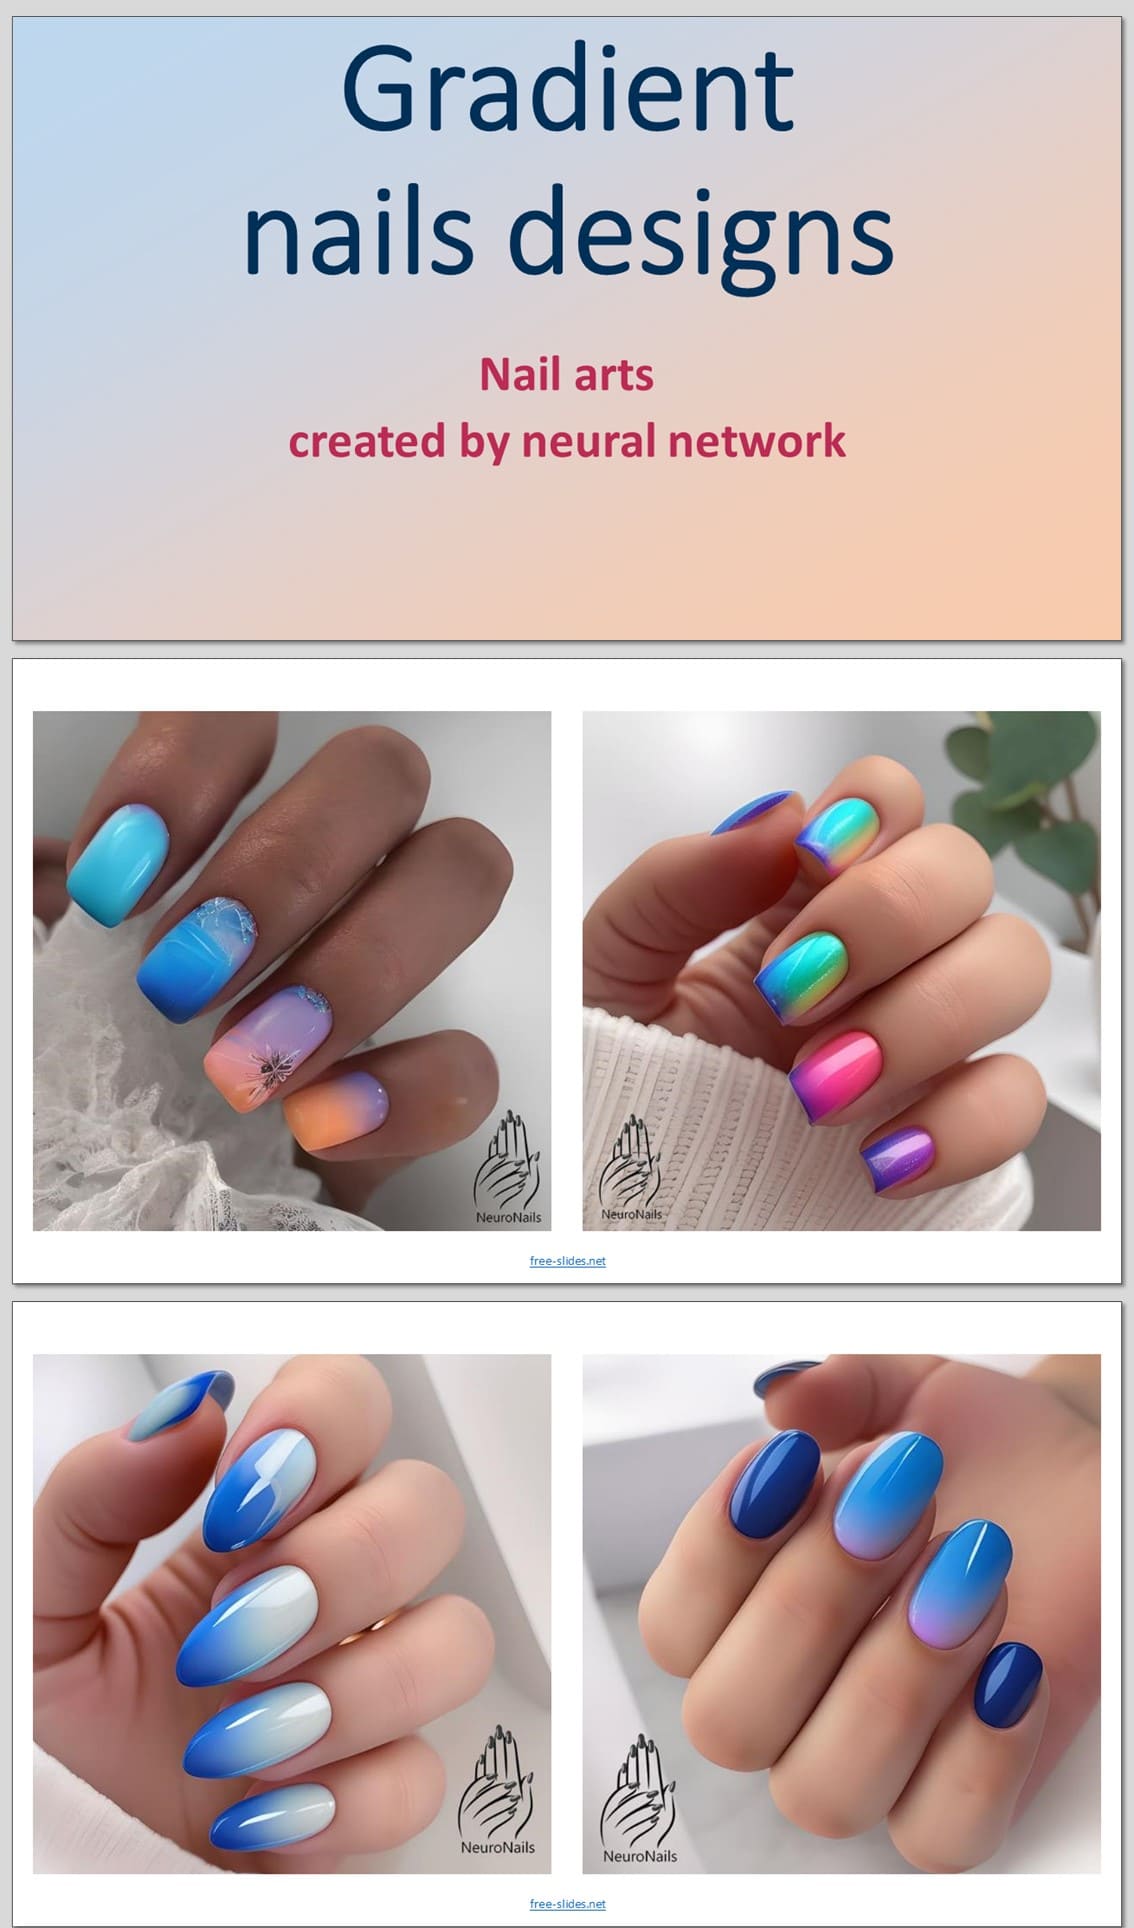 Neural network creates gradient nails designs